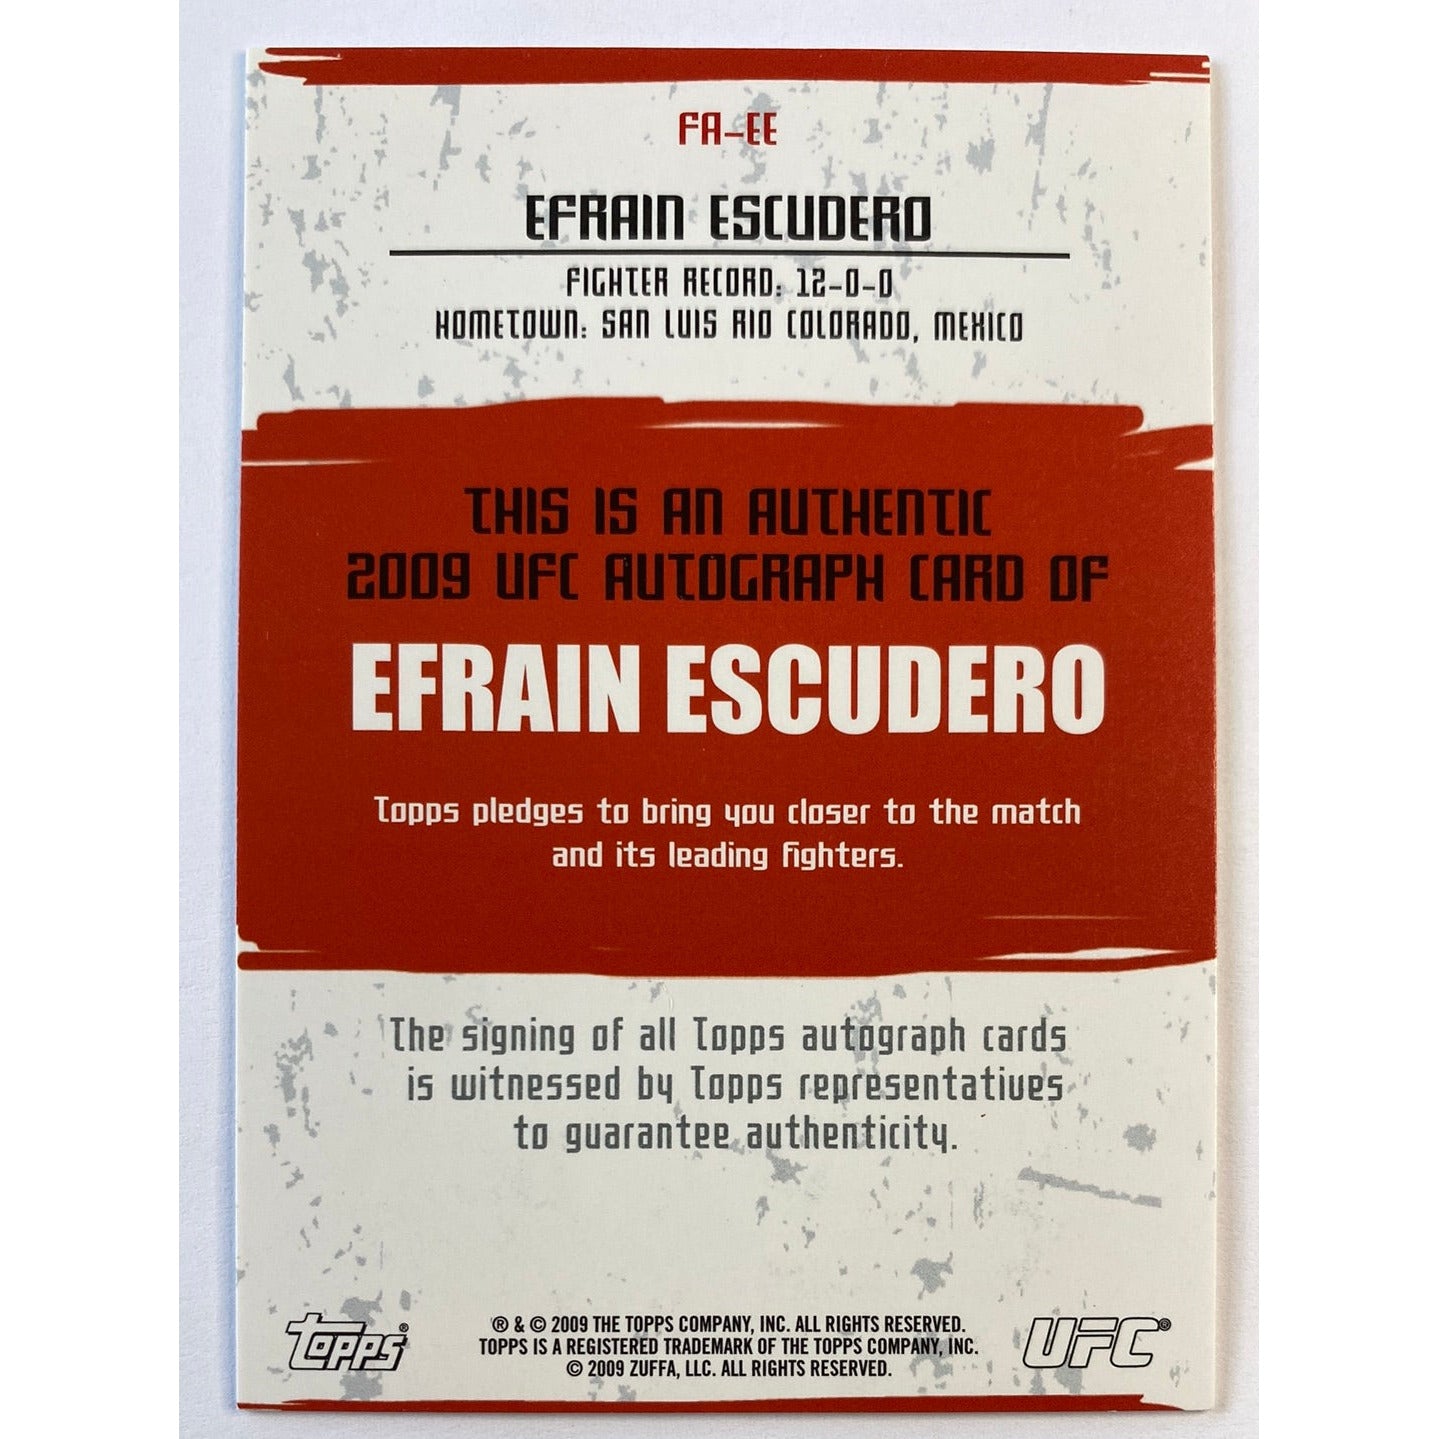 2009 Topps Efrain Escudero Certified Autograph